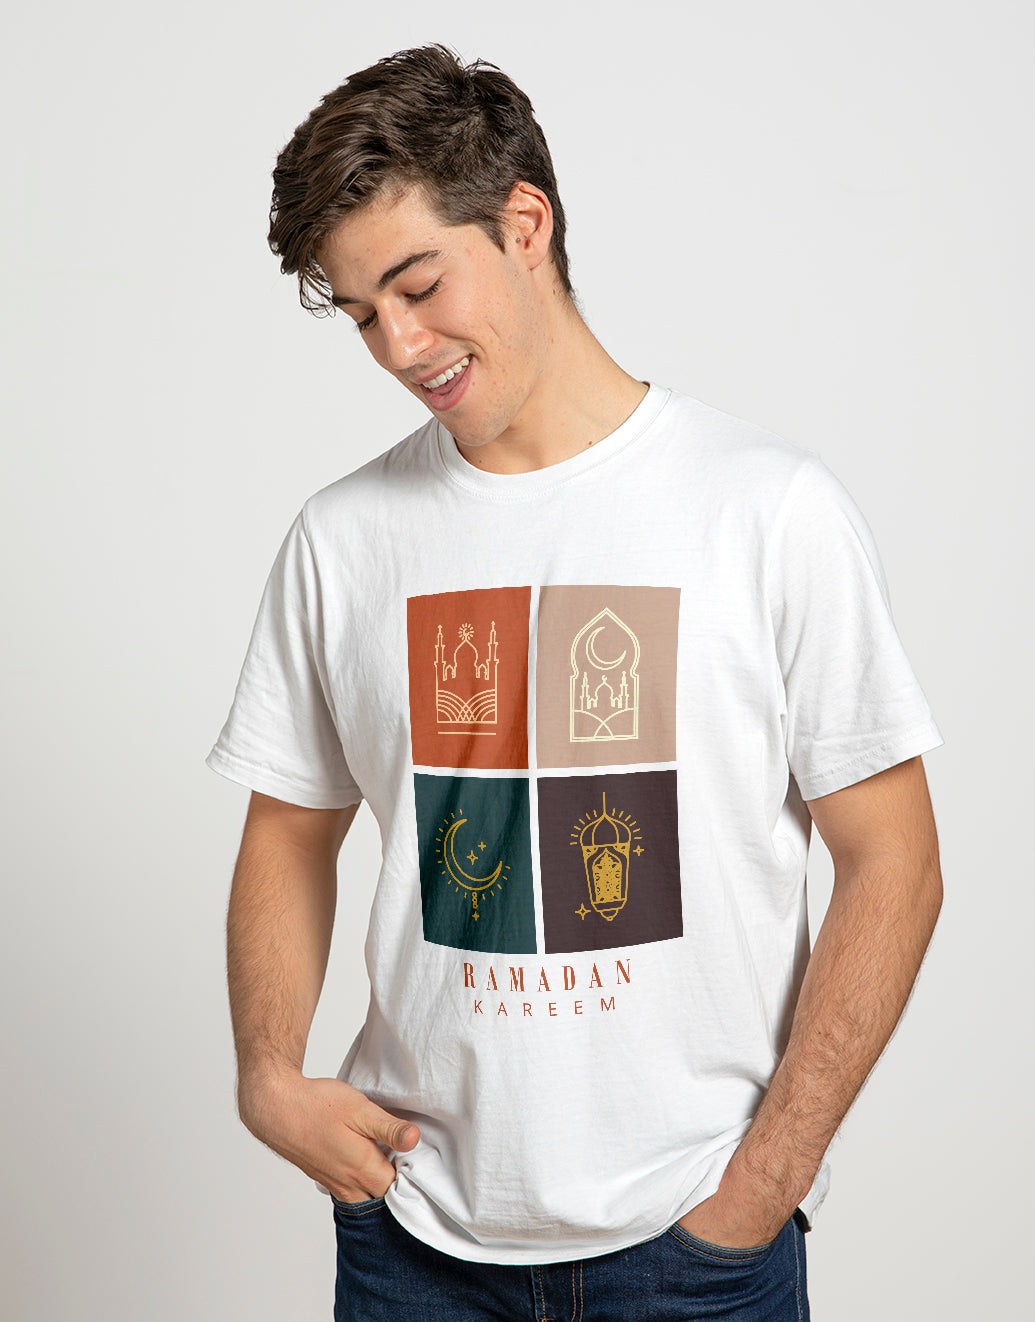 T-shirt for Men (Ramadan Kareem)